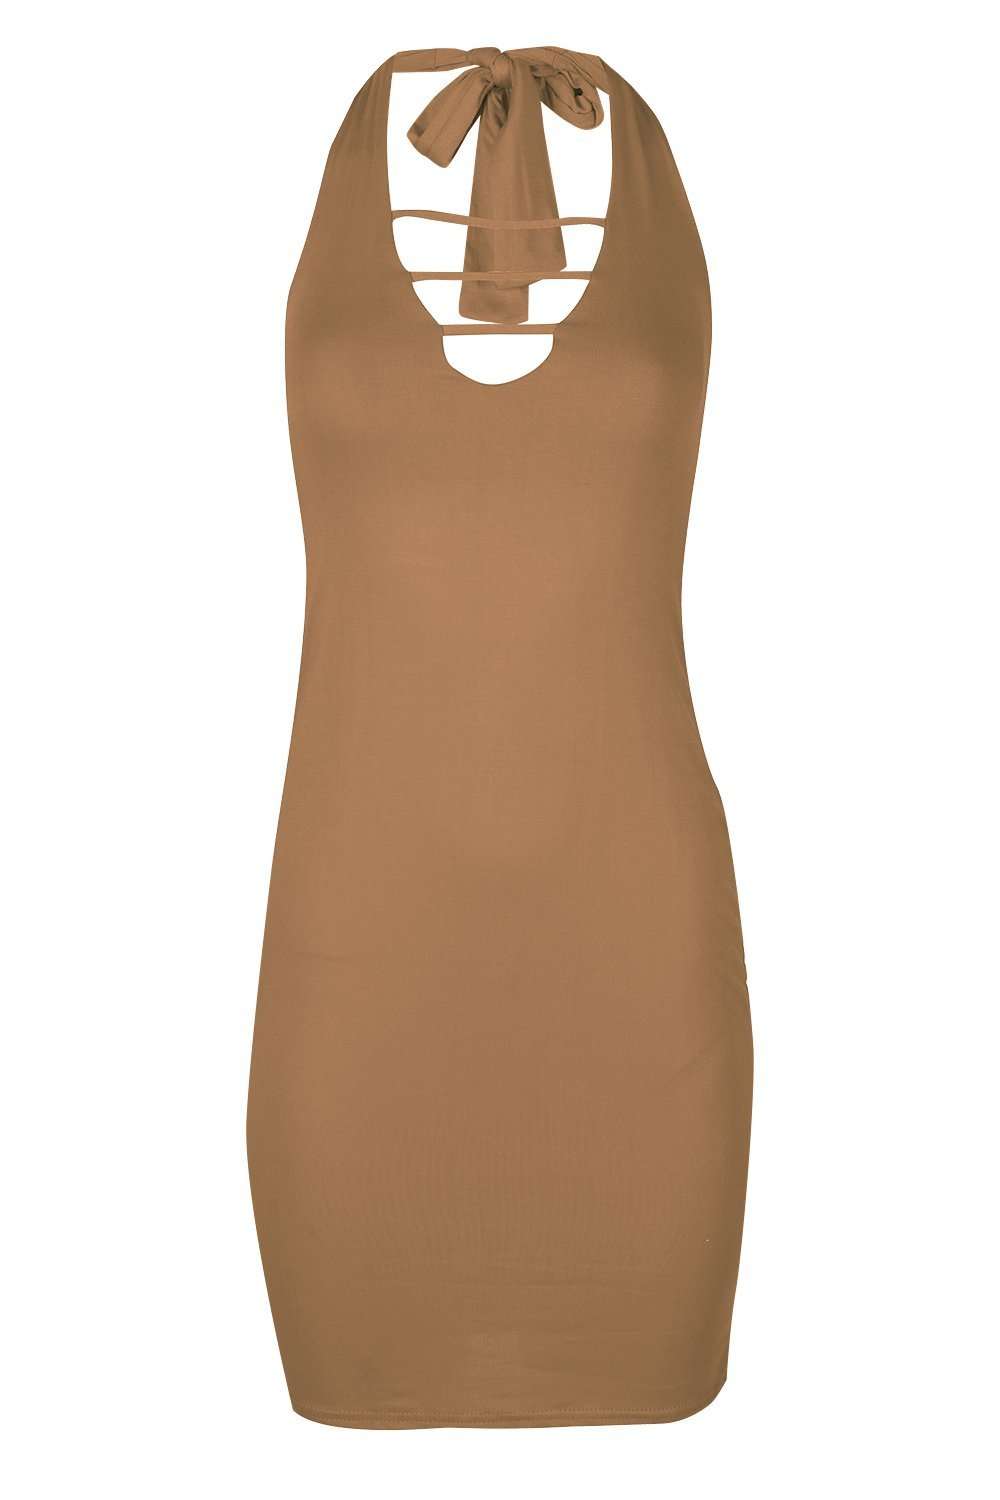 Zara Plunge Halterneck Bodycon Midi Dress - bejealous-com